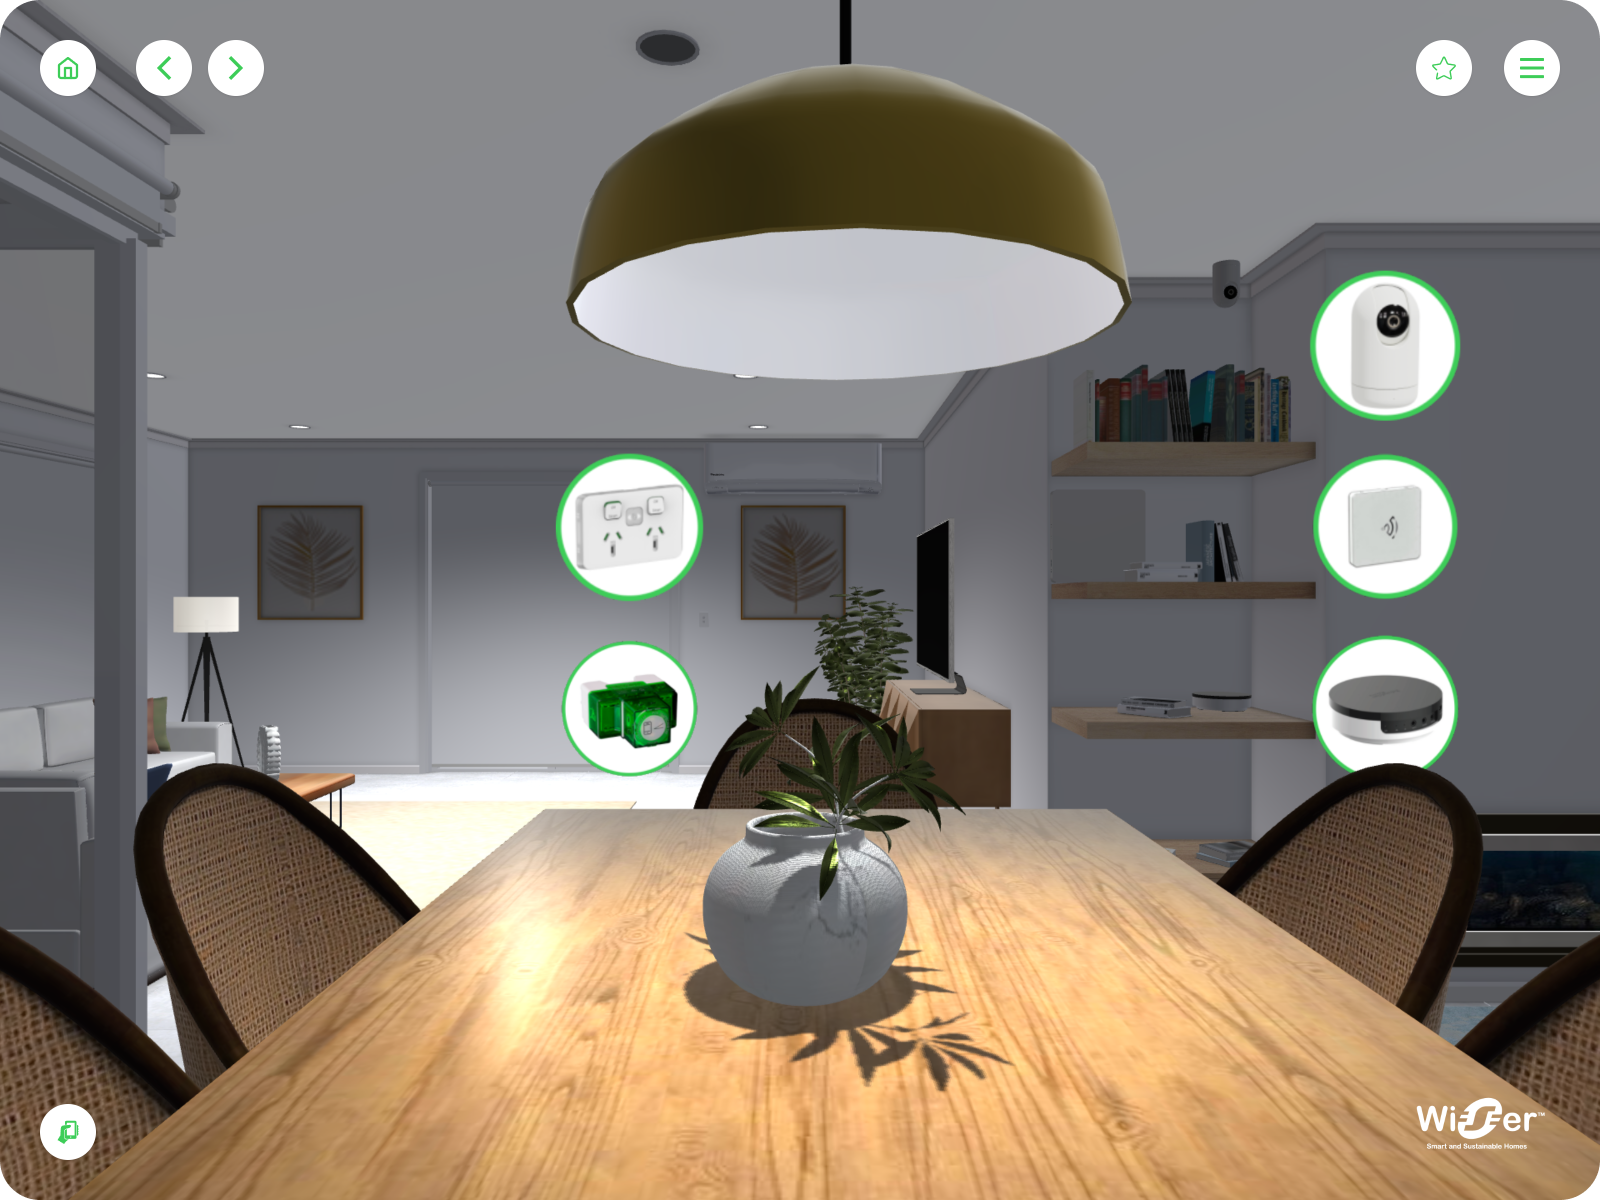 Product range displayed in virtual home